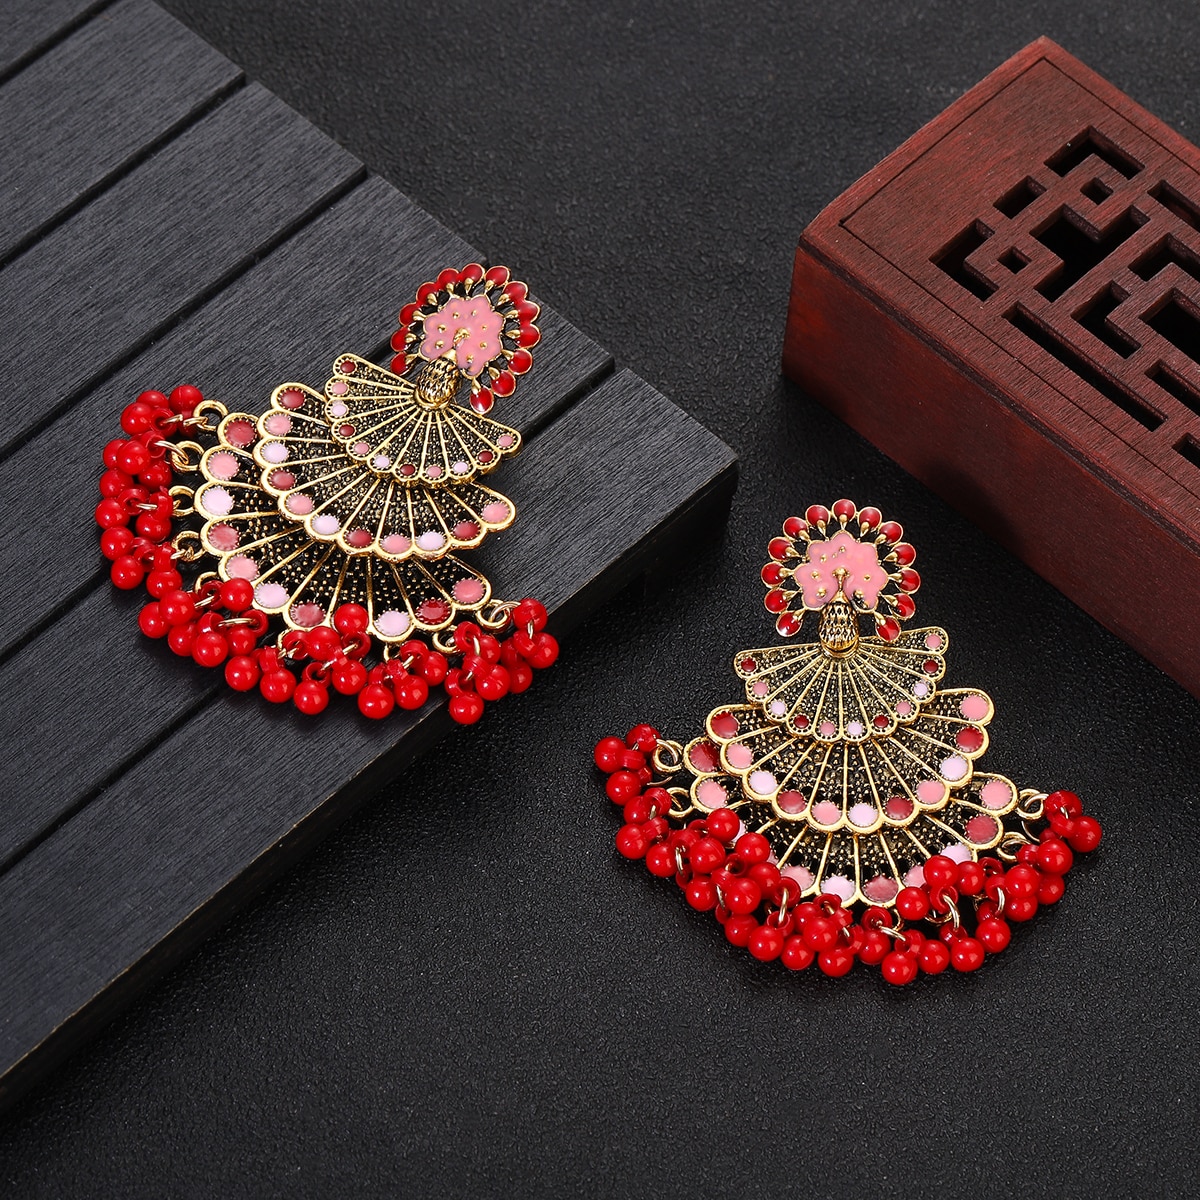 Indian-Jewellery-Red-White-Sector-Jhumka-Earrings-For-Women-Orecchini-Retro-Pearl-Beads-Tassel-Earri-1005004587102350-3